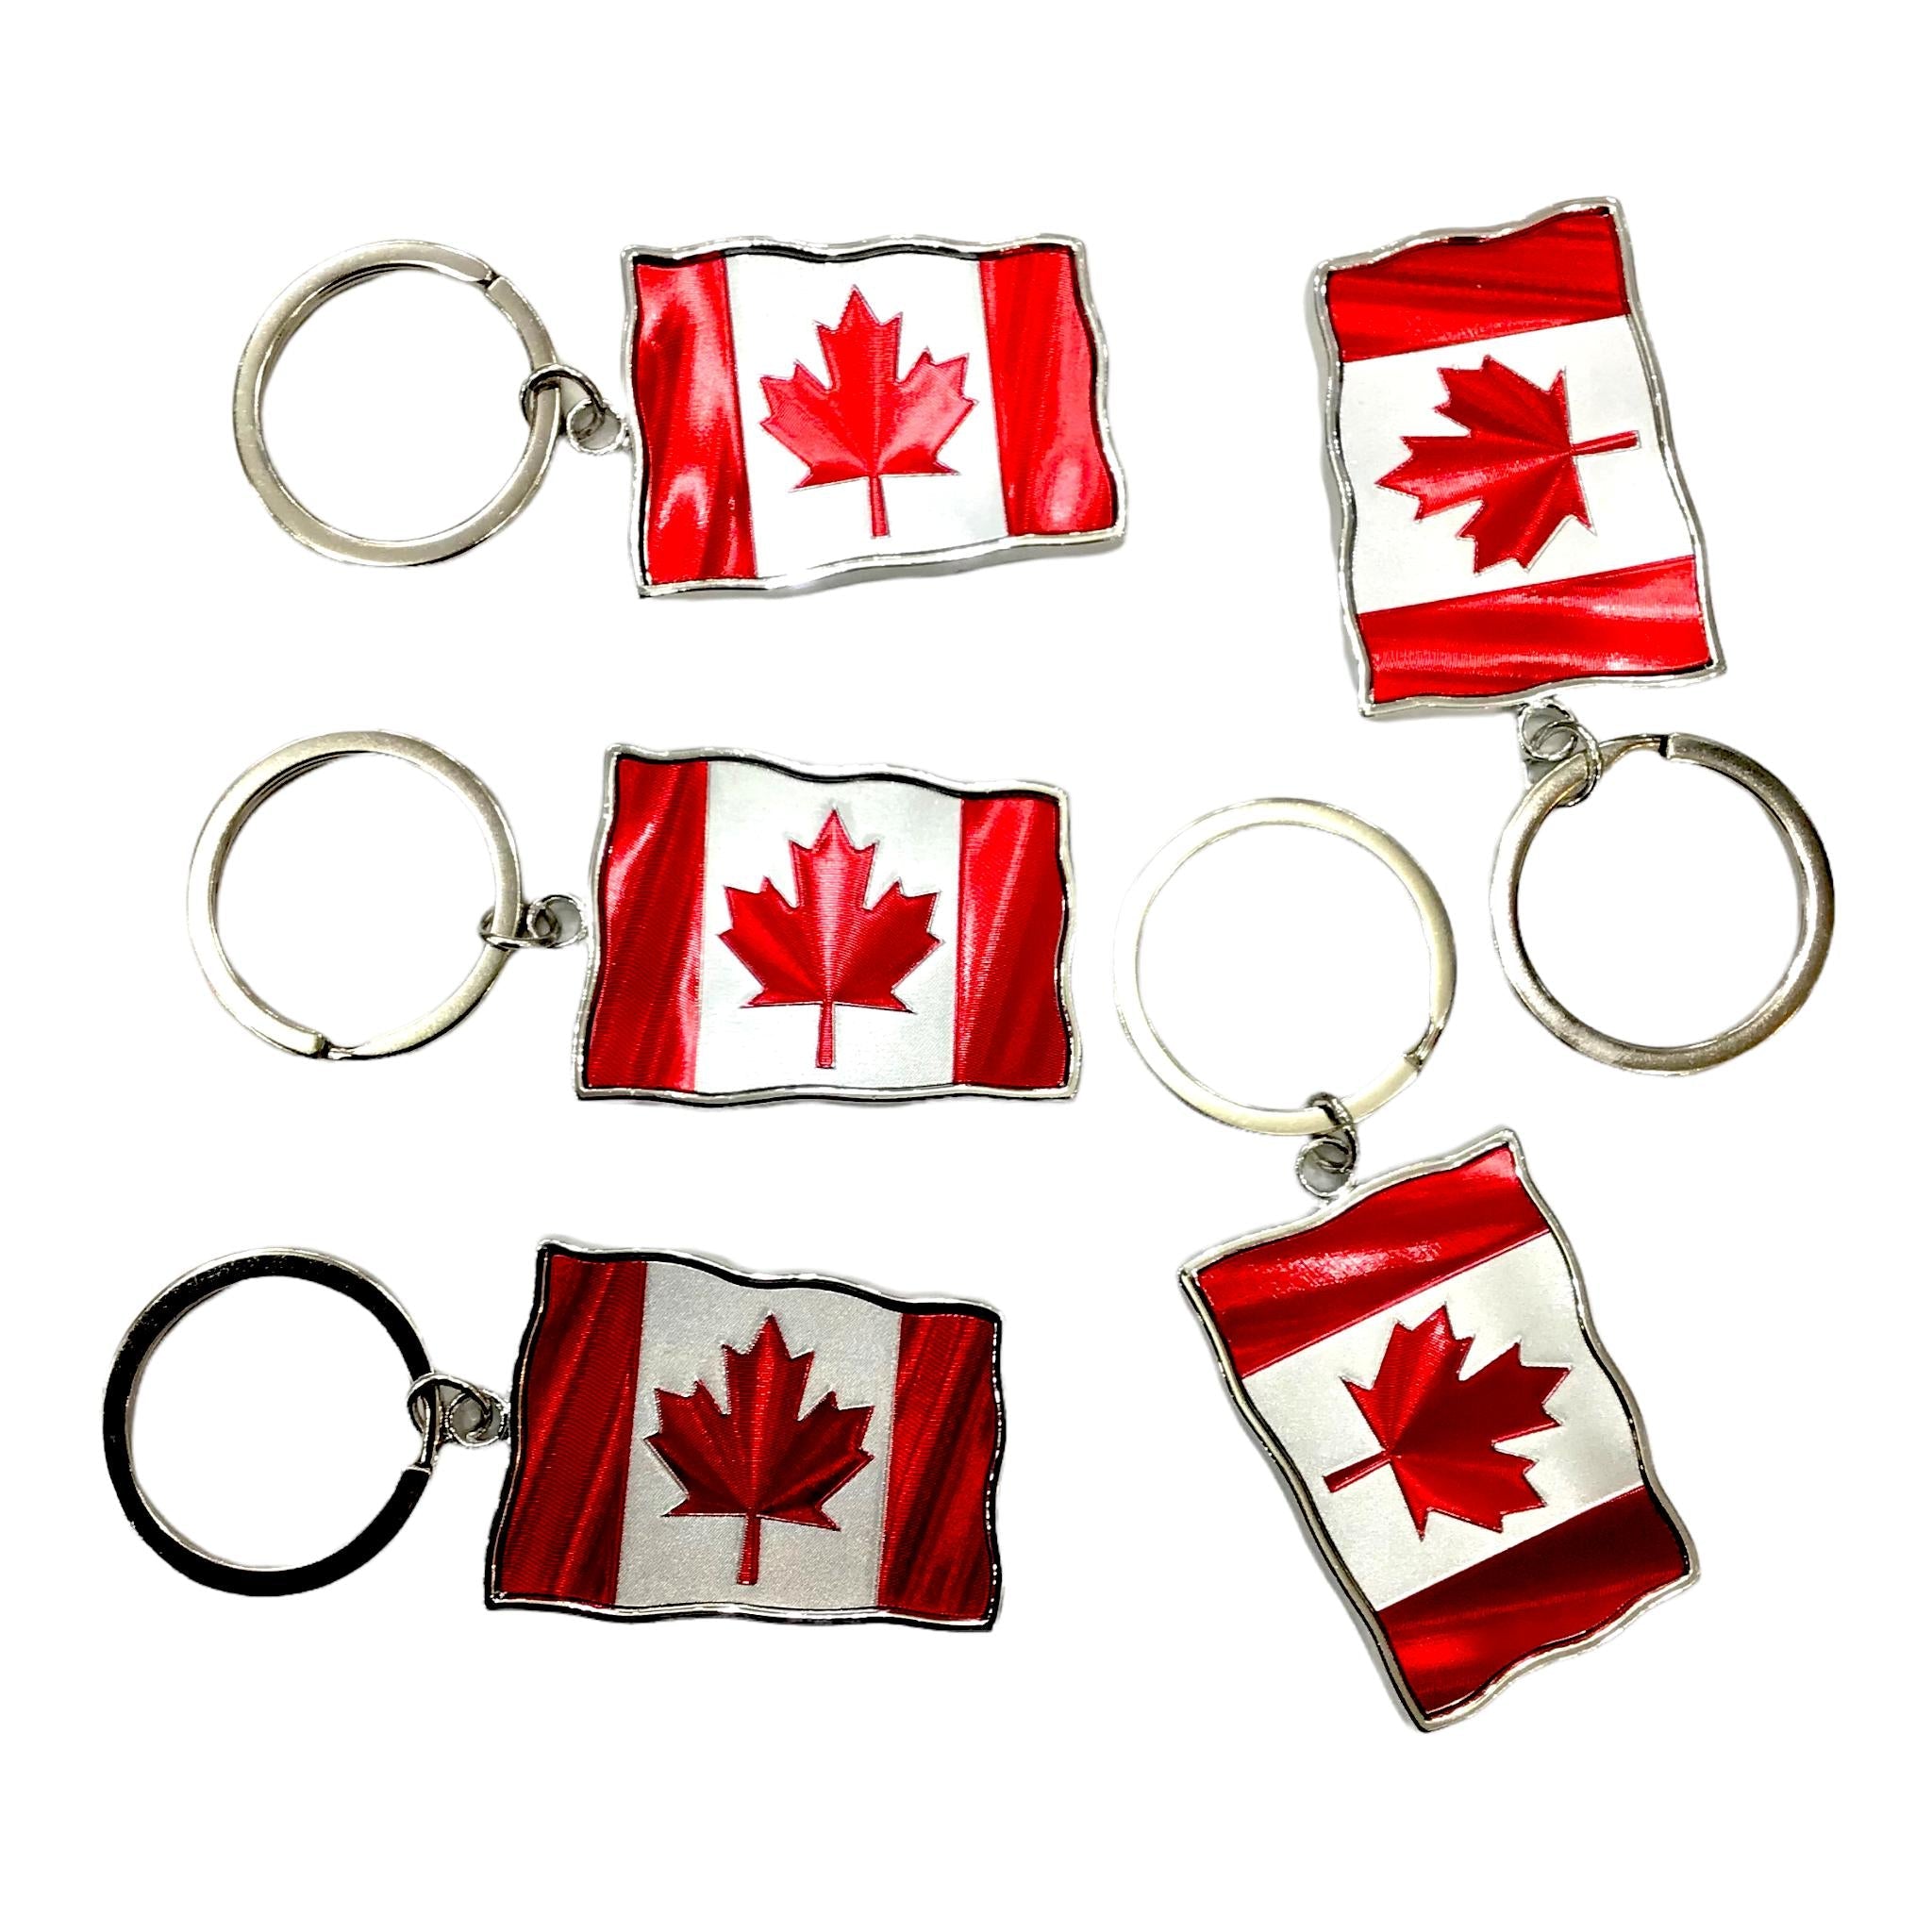 5 Keychains - Canadian Waving National Flag Porte Clé. Metal DieCast Souvenir